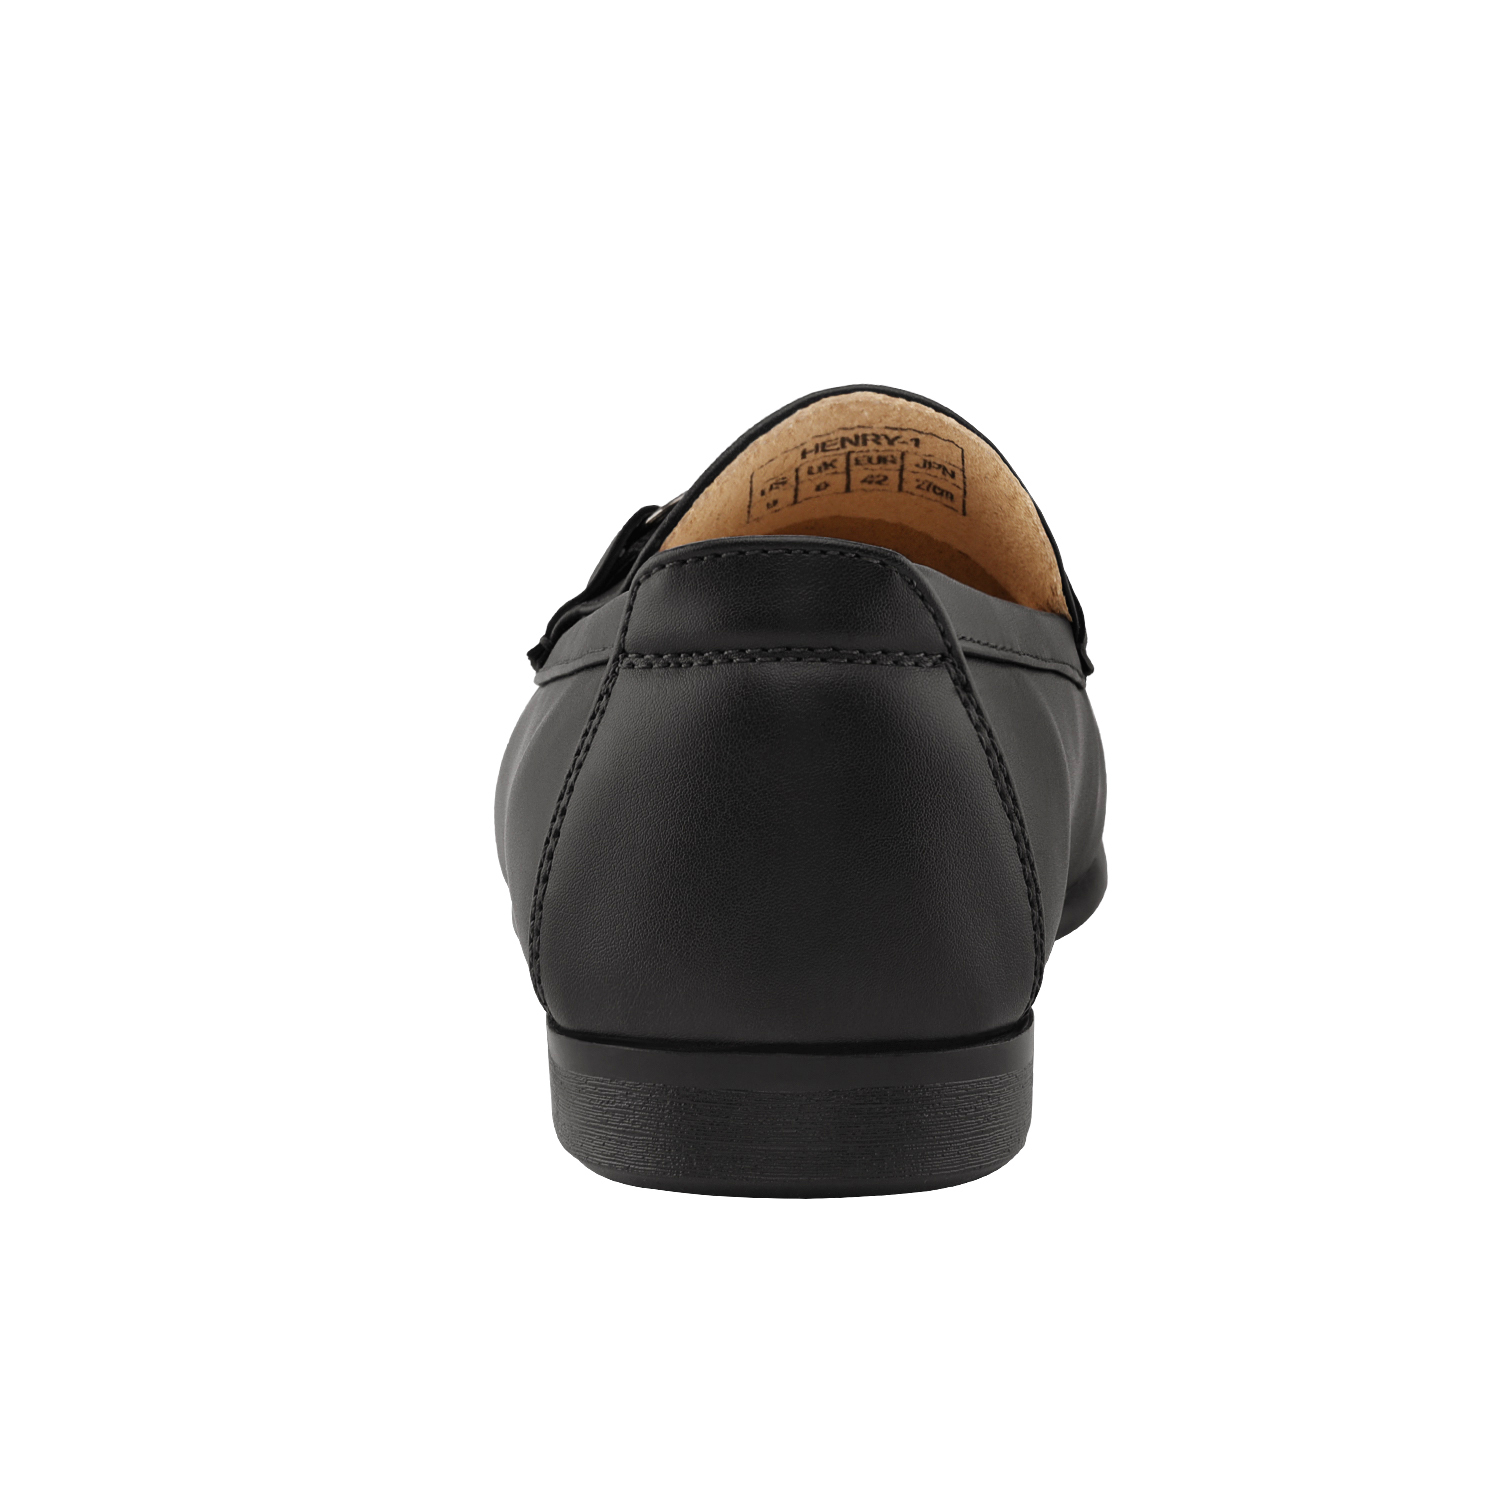 Bruno Marc Men's Moccasin Loafer Shoes Men Dress Loafers Slip On Casual Penny Comfort Outdoor Loafers HENRY-1 BLACK Size 9 - image 3 of 5